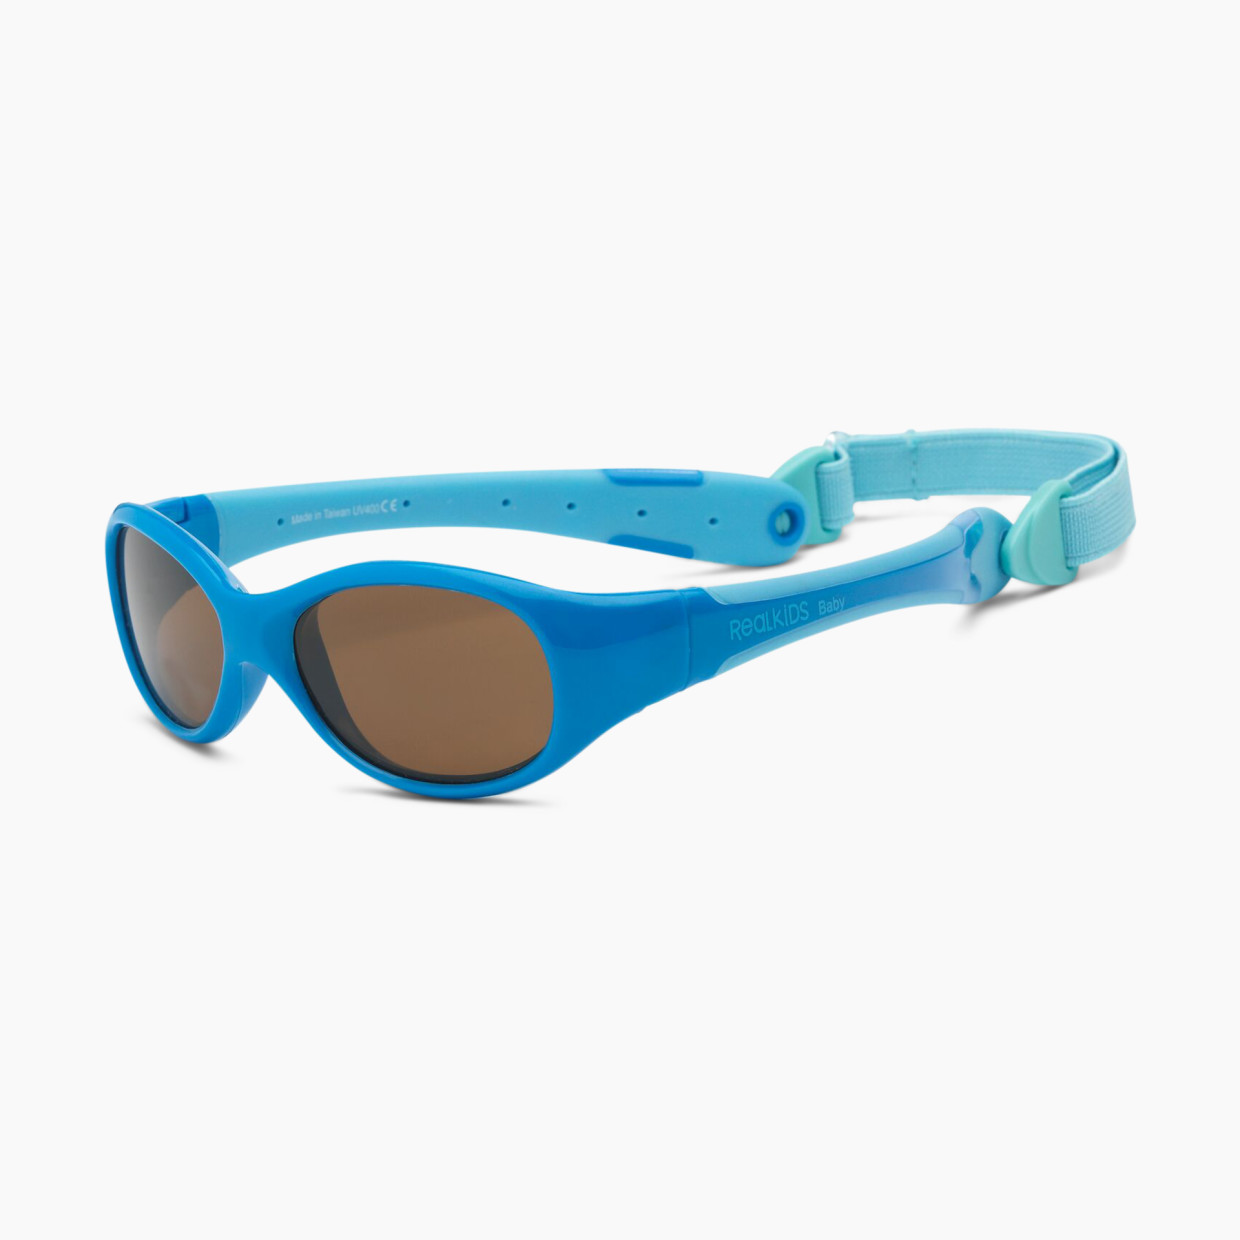 Real Shades Explorer Polarized Sunglasses - Blue/Light Blue, 0-24 Months.